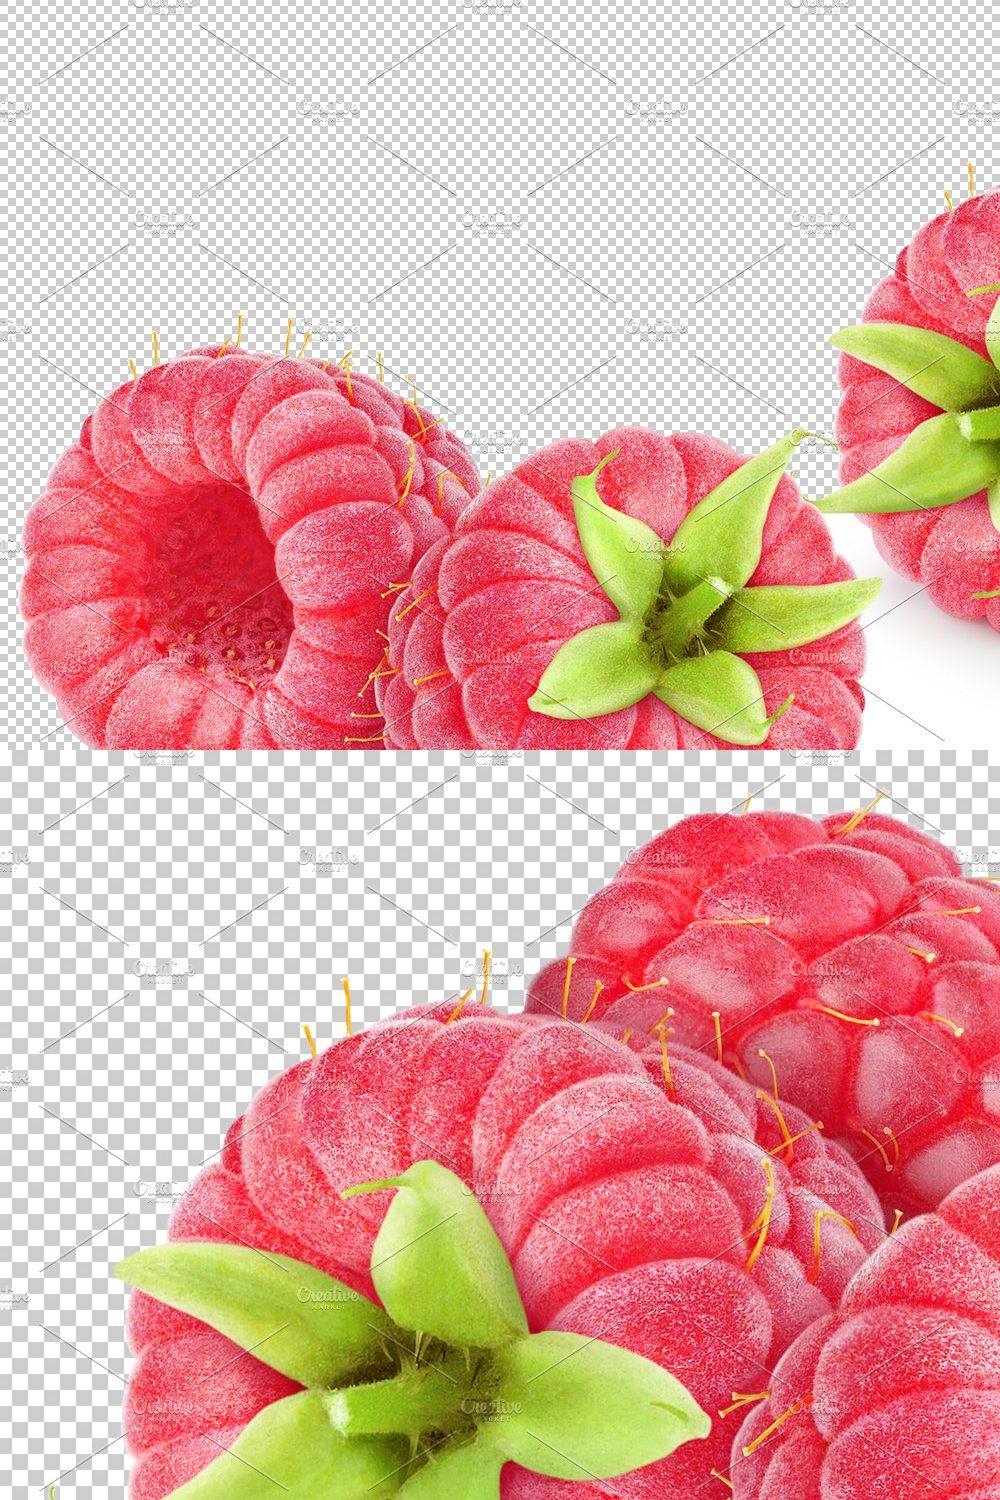 Fresh raspberries pinterest preview image.